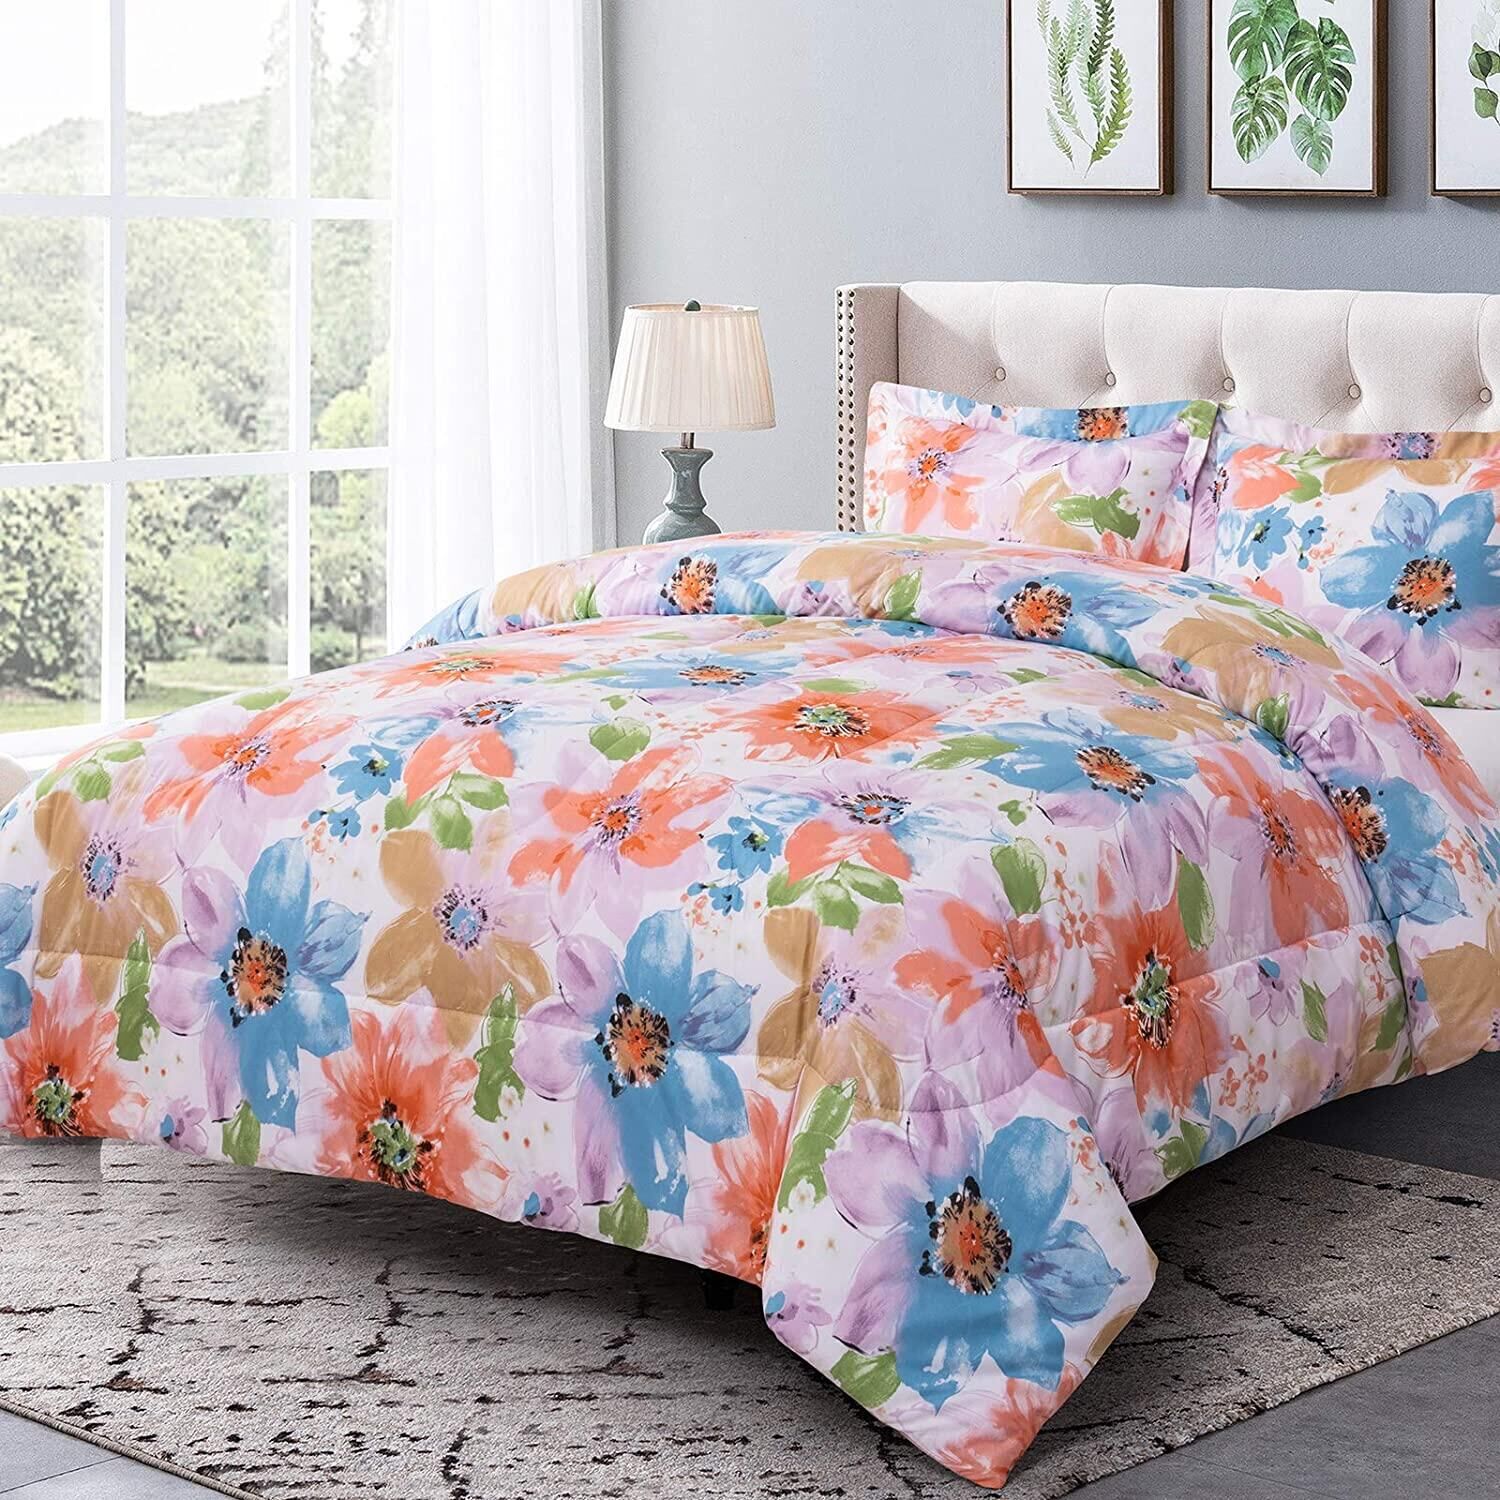 Shatex Queen Comforter 3 Pieces Bedding Comforter Sets Flower Comforter– Ultra Soft 100% Microfiber Polyester 被子三件套